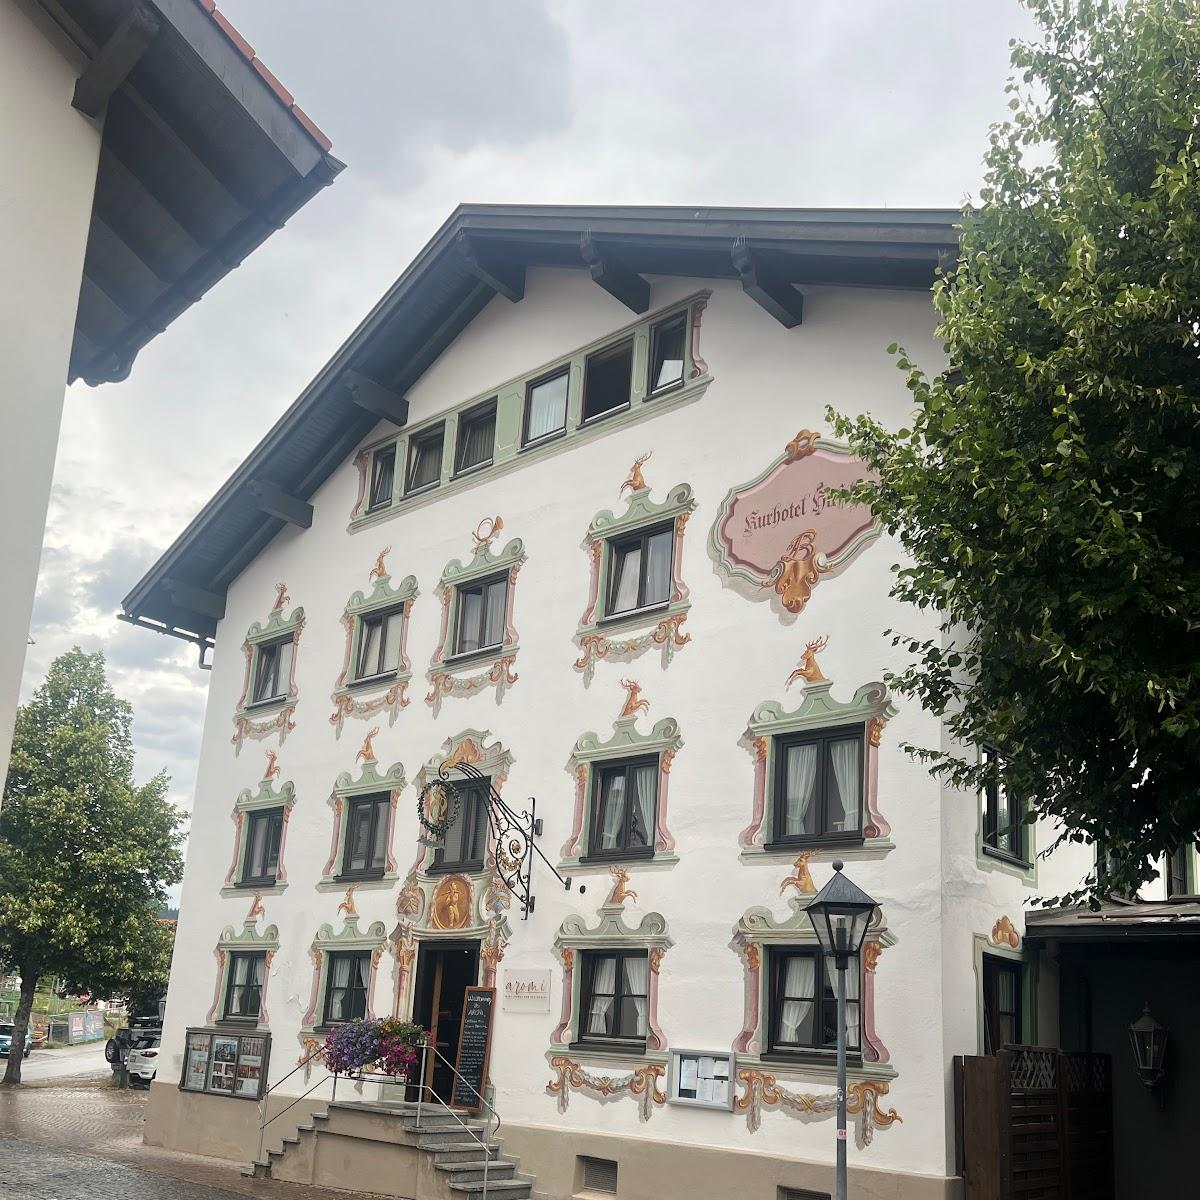 Restaurant "Aromi Restautant & Wine Lounge" in Oberstaufen